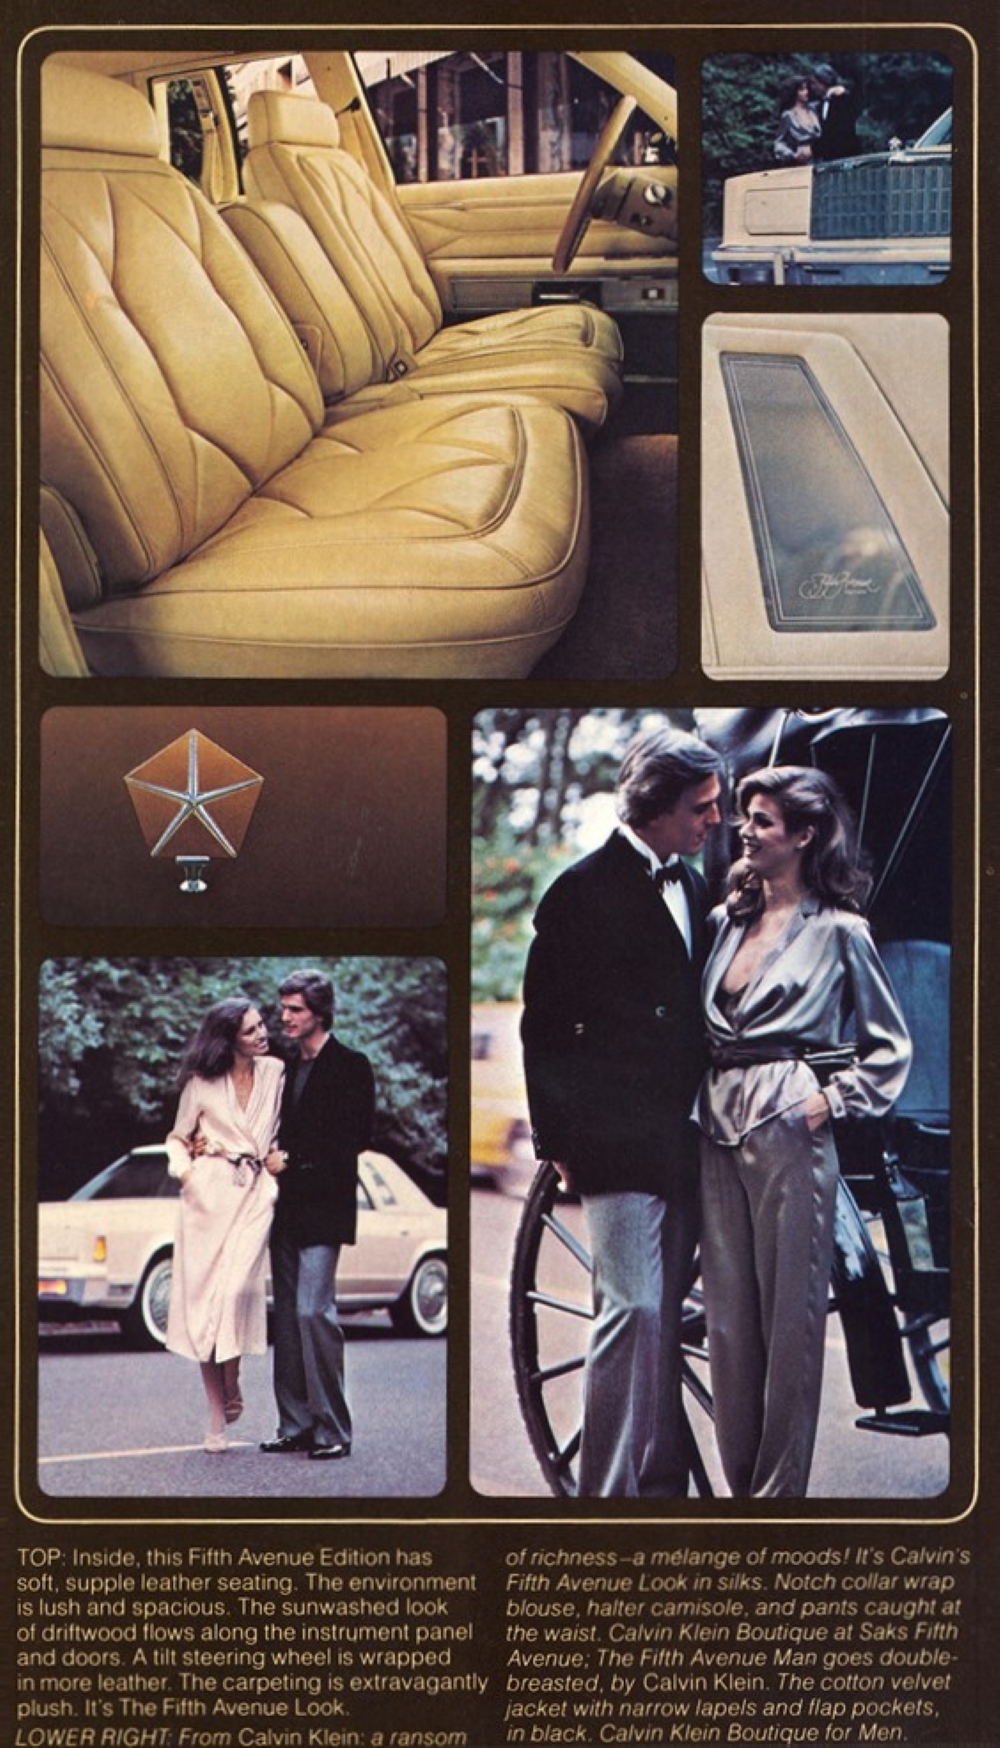 1978 November Vogue US.   Ad for Chrysler Fifth Avenue Edition AND Calvin Klein Boutique at Saks Fifth Avenue.  Gia Carangi supermodel.